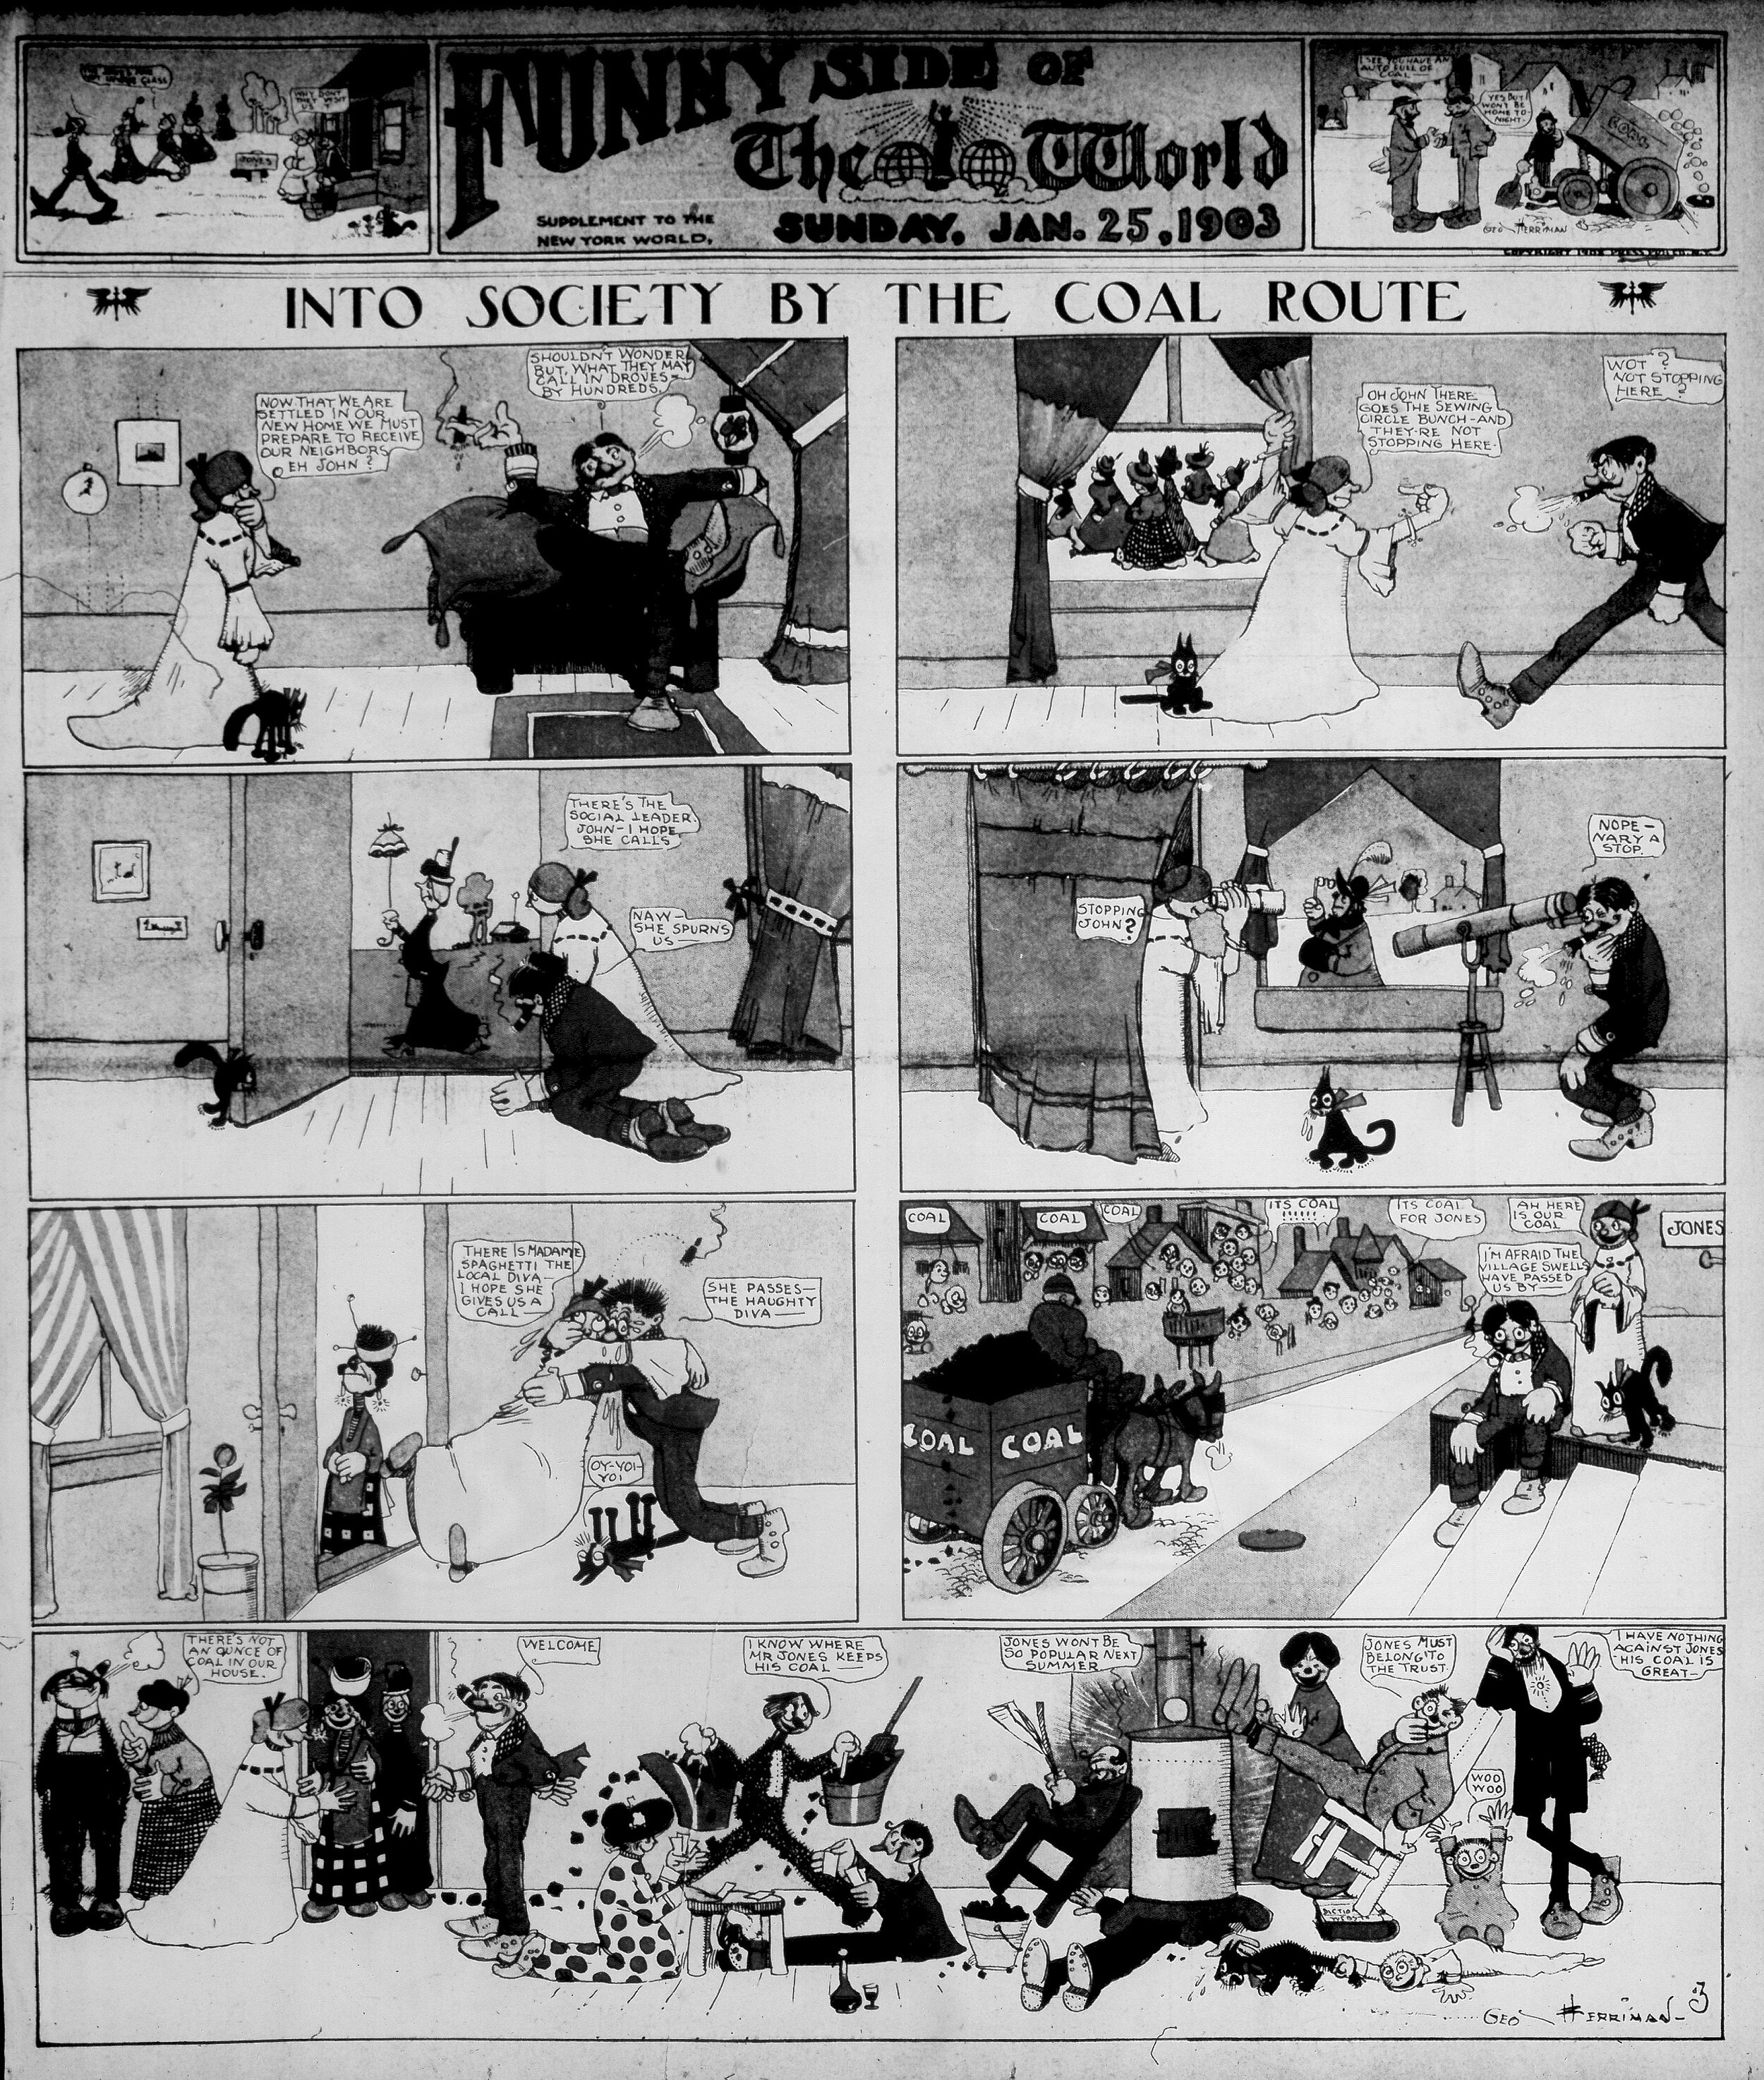 06-1903-01-25-nyw-herriman-comic.jpg